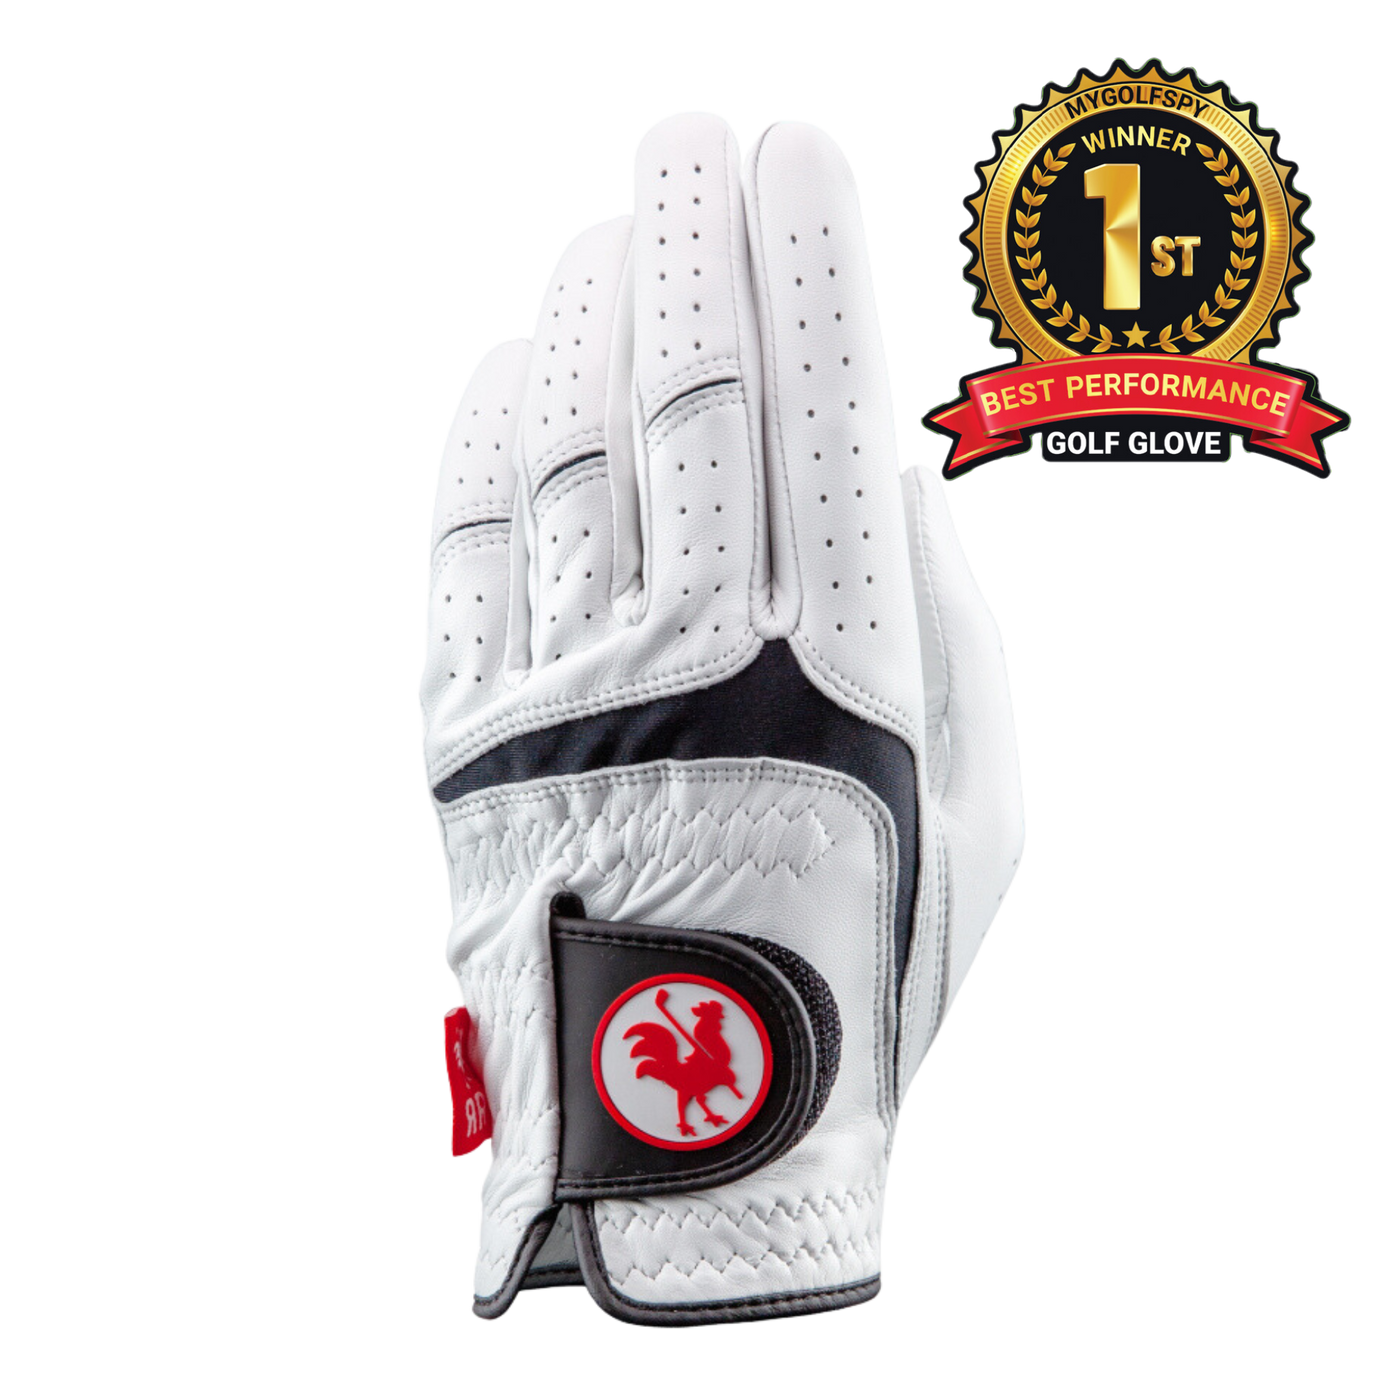 premium Cabretta leather Women's Cape golf glove